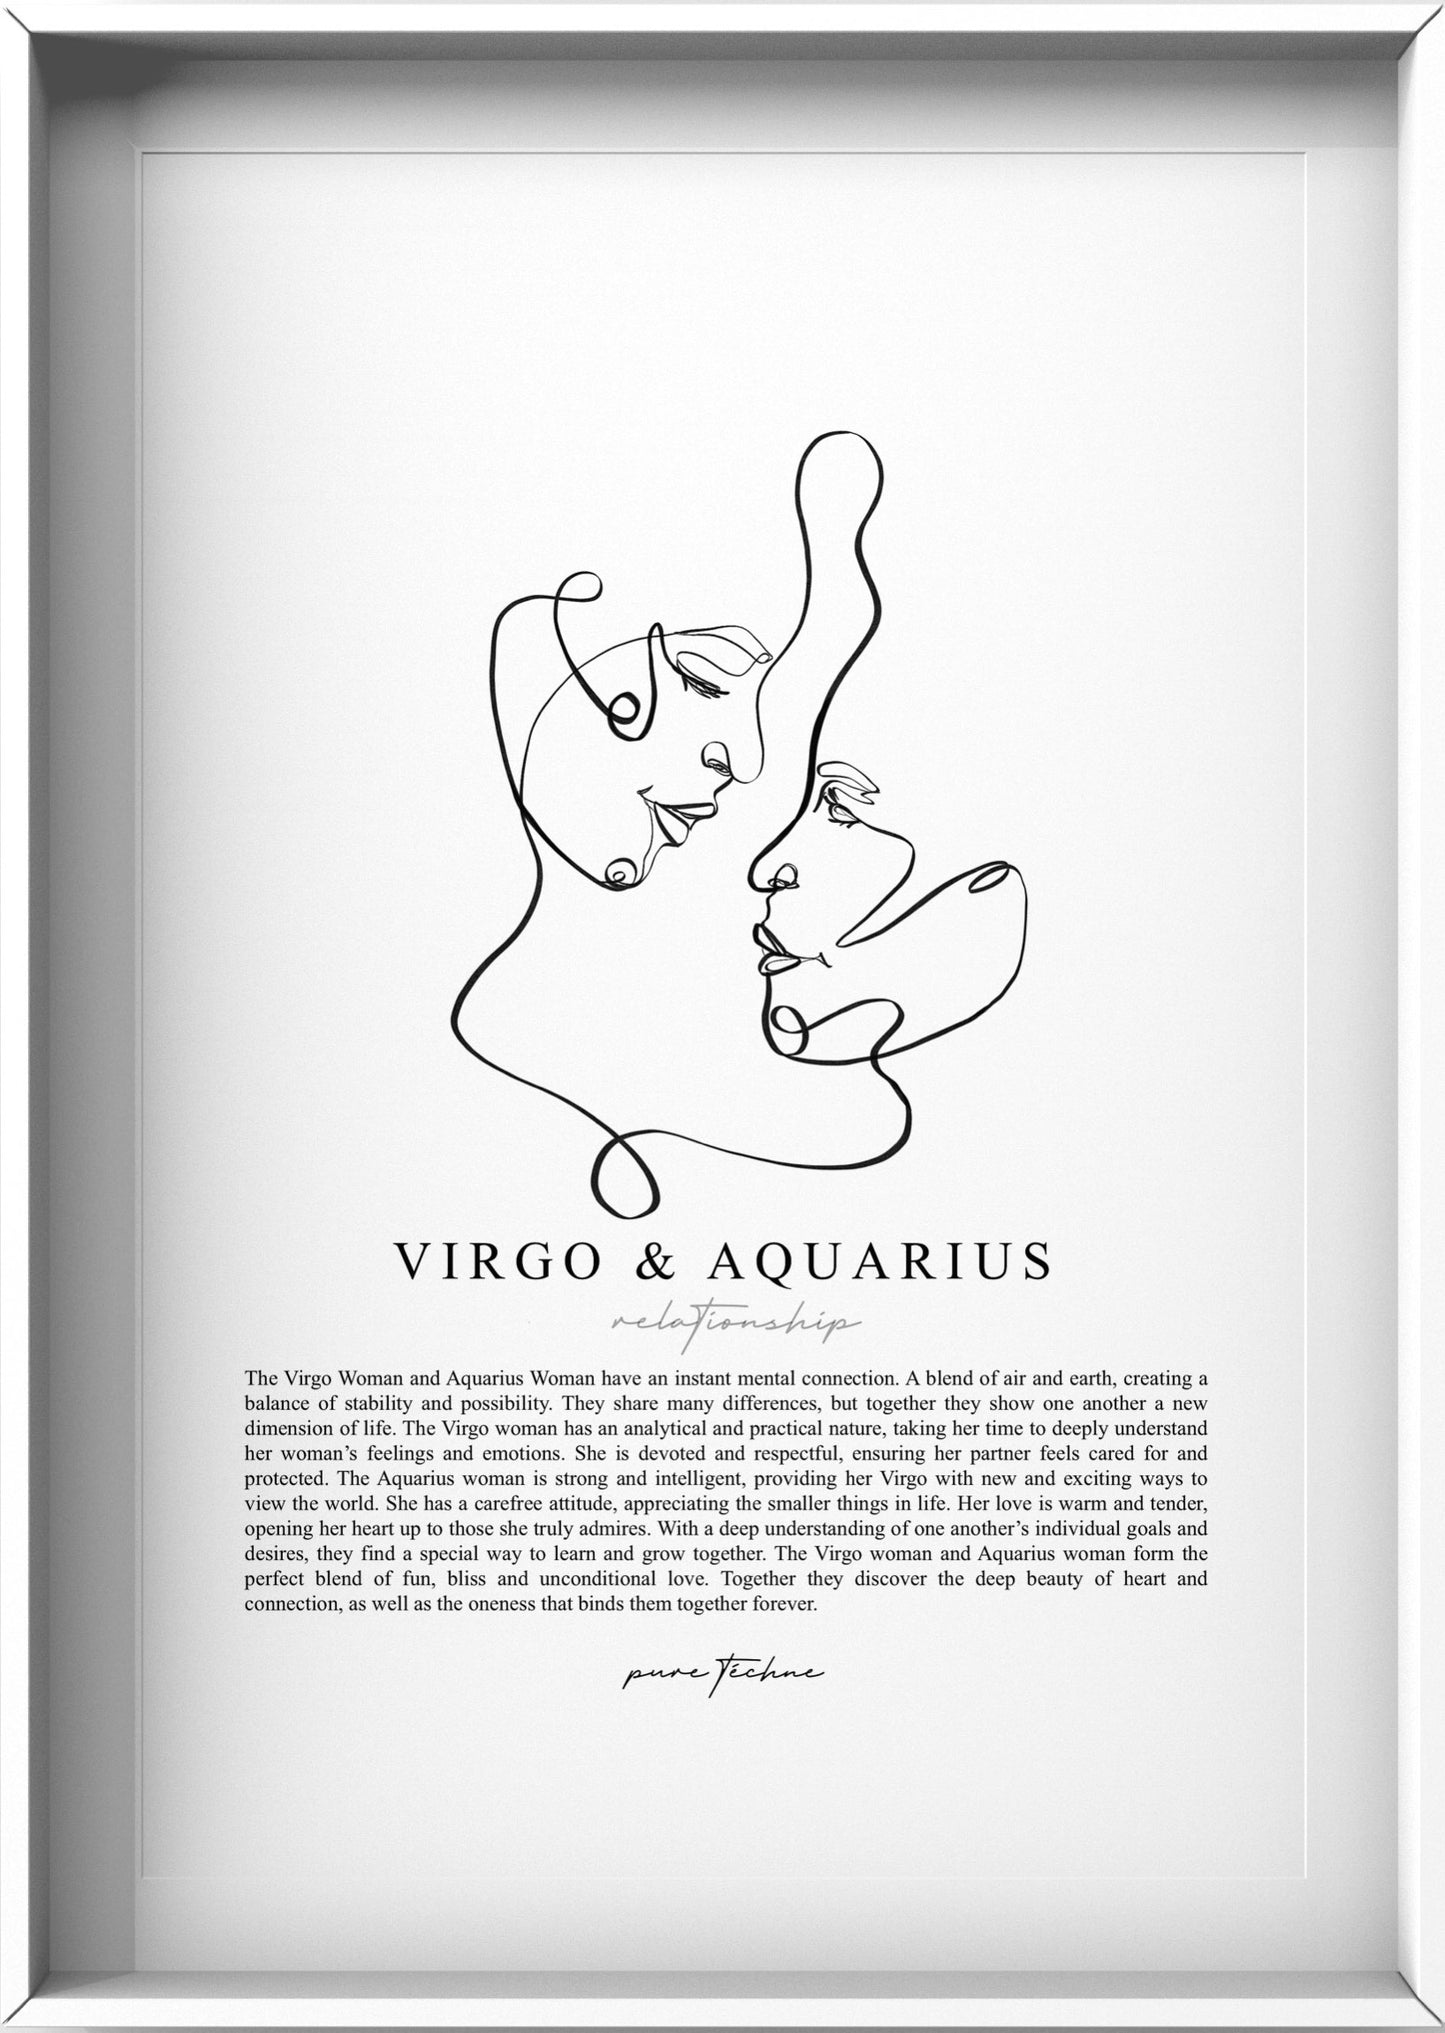 Virgo Woman & Aquarius Woman